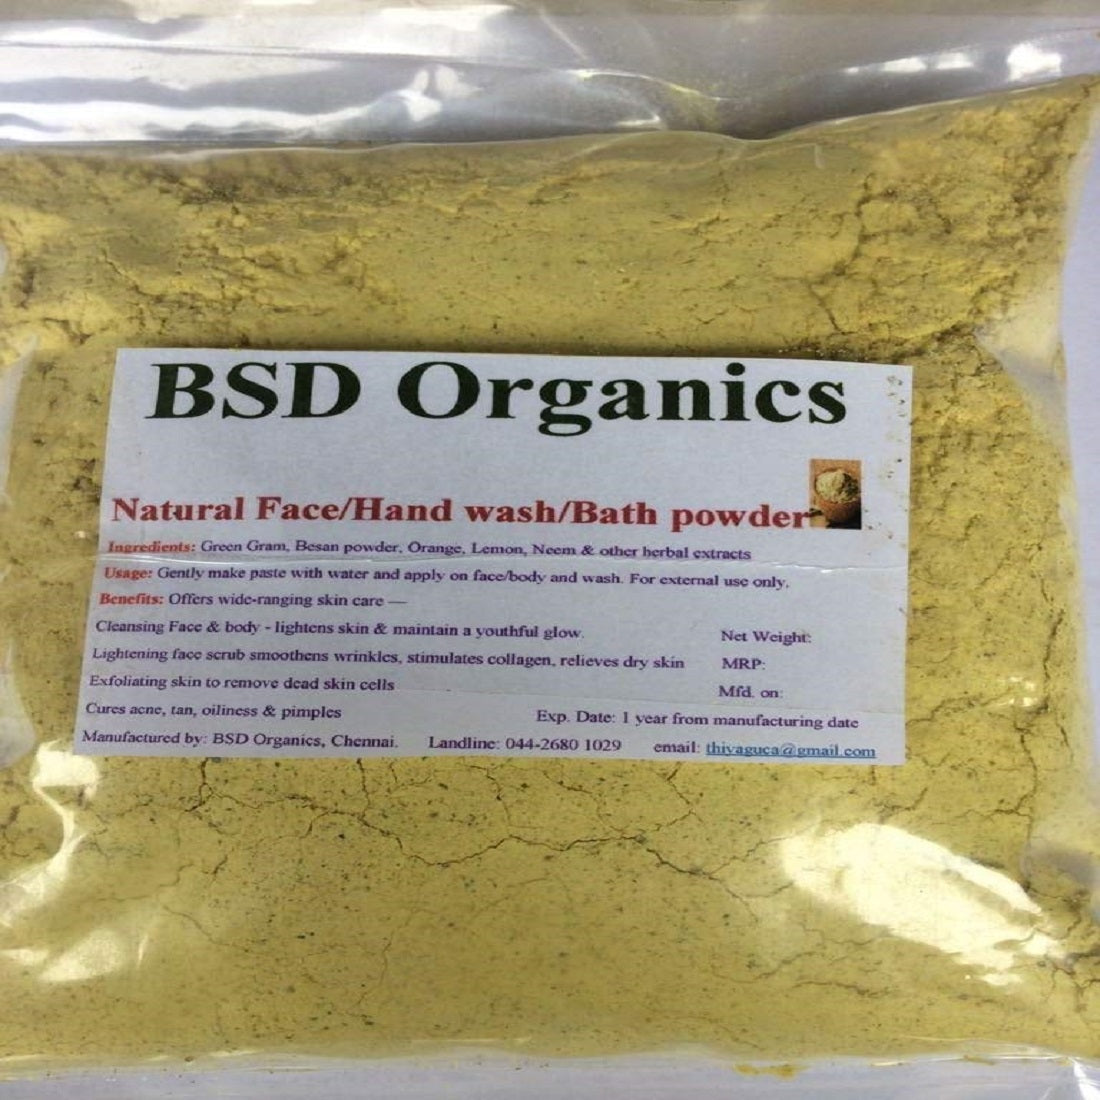 BSD Organics Natural Herbal face wash/bath powder - 100 Gram.